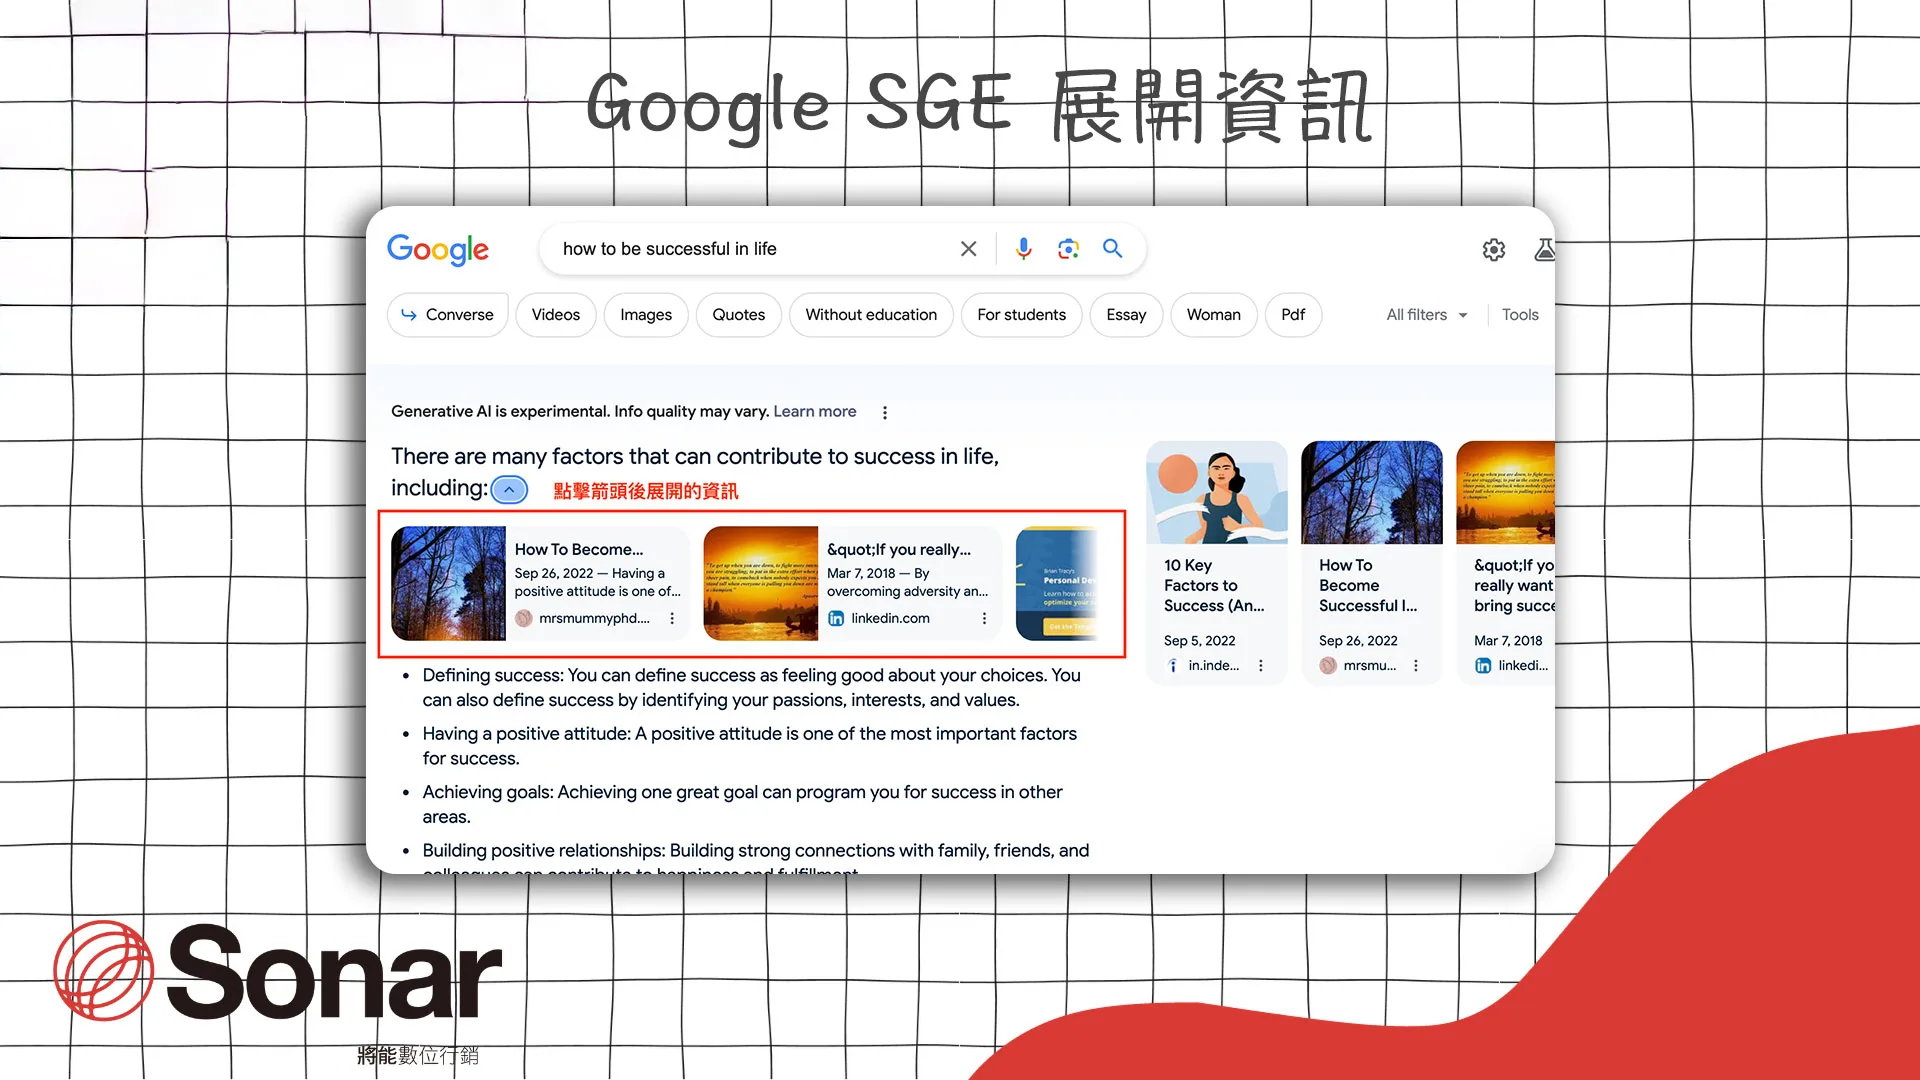 Google-SGE-展開資訊